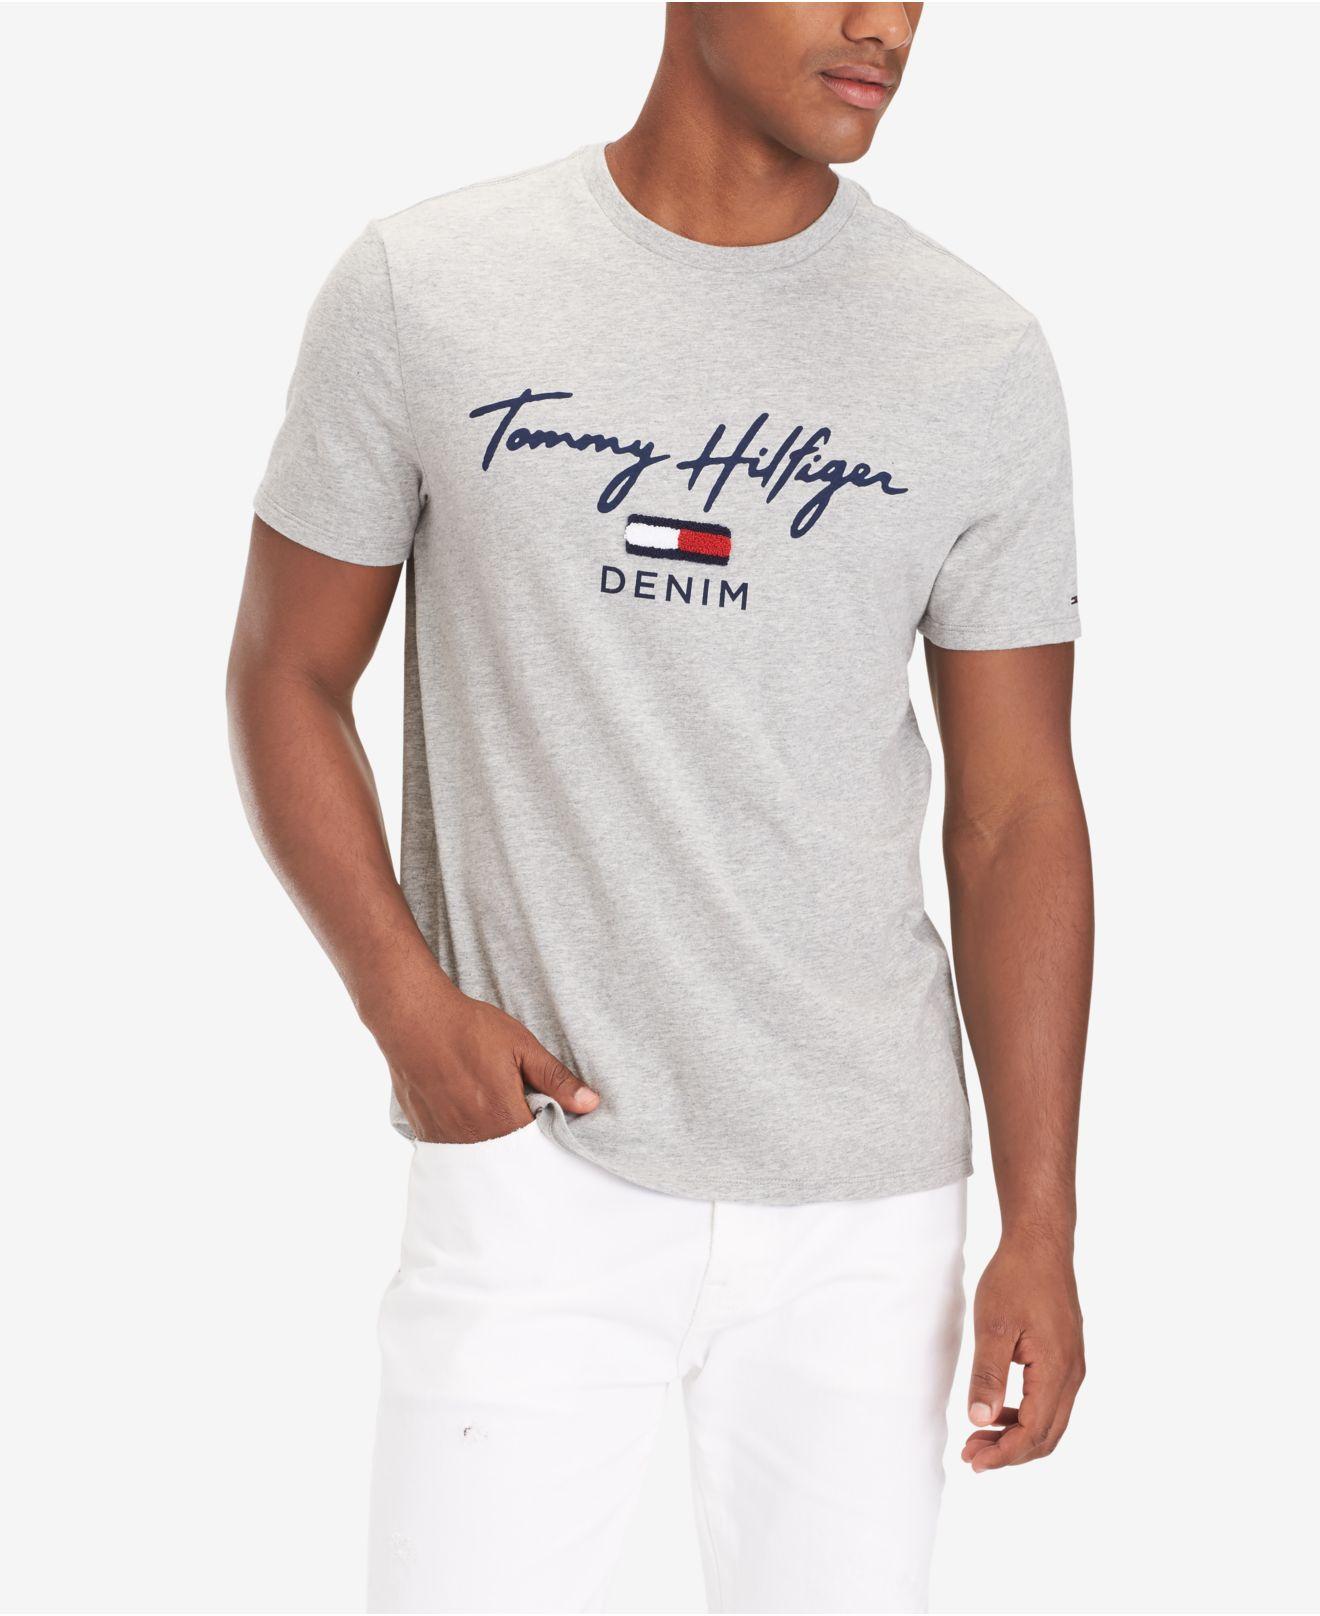 Tommy Hilfiger Denim T Shirt Flash Sales, 60% OFF | www.rachelotoole.ie